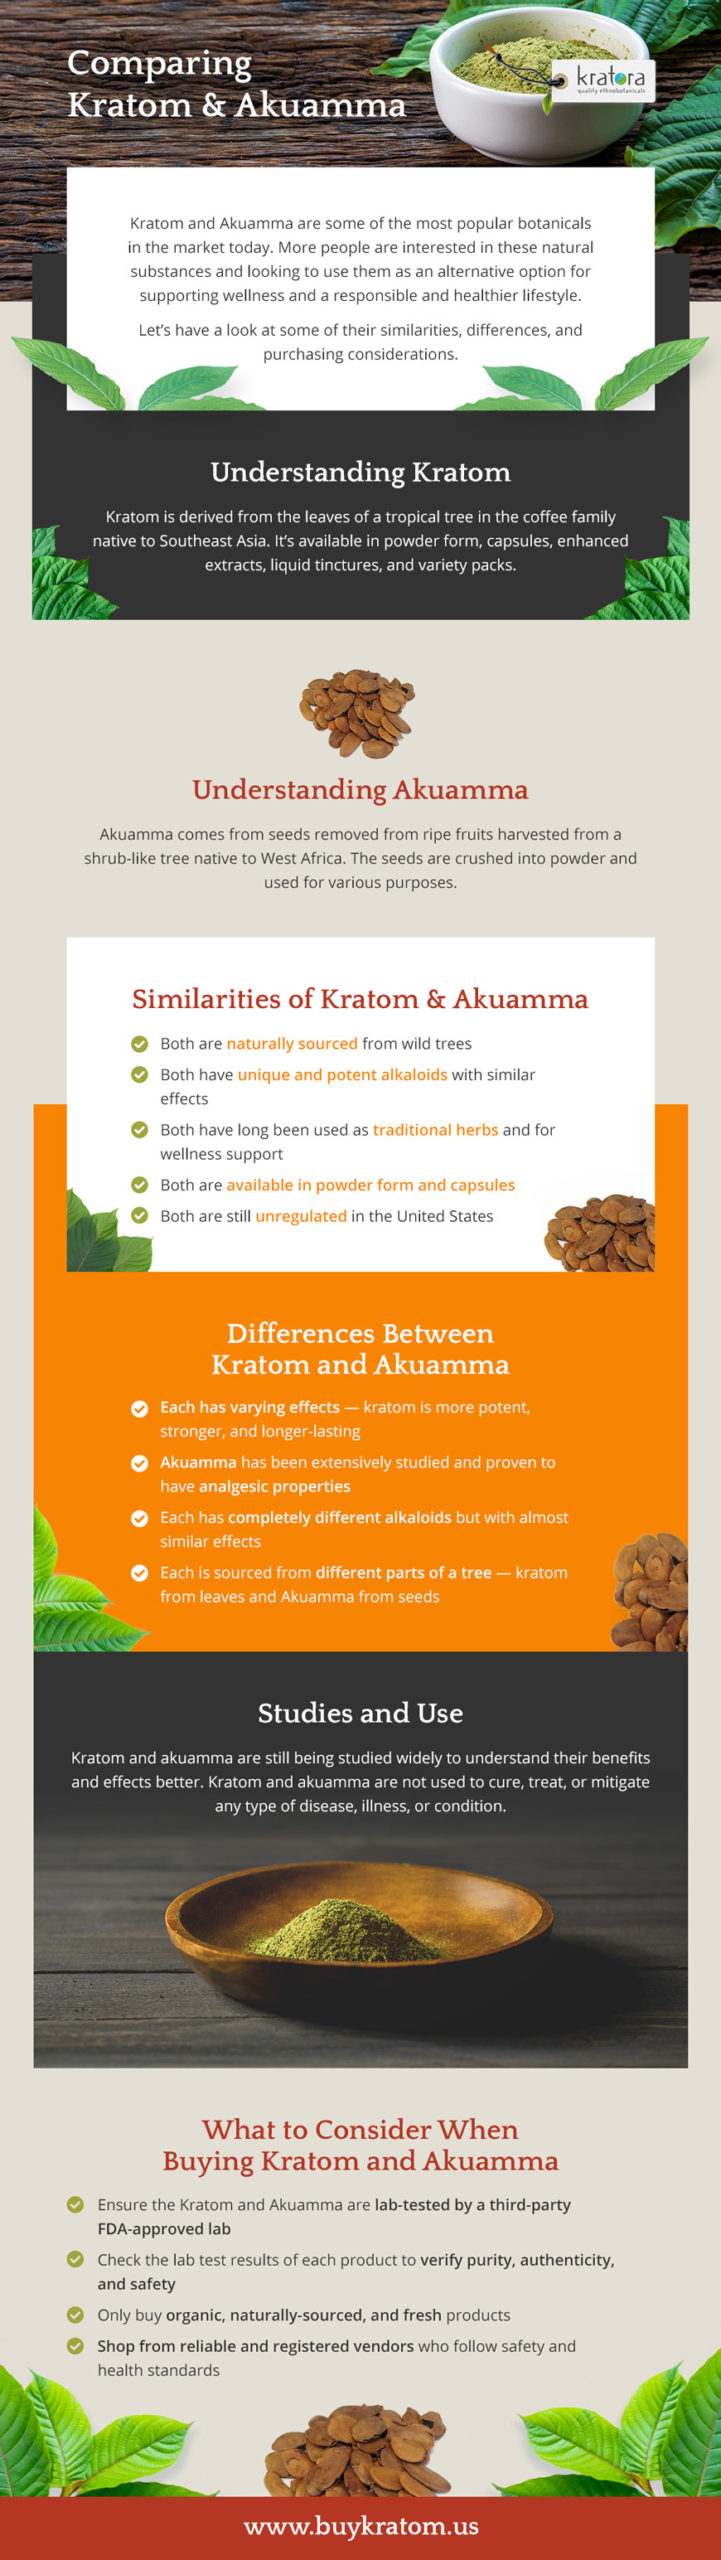 Comparing Kratom and Akuamma